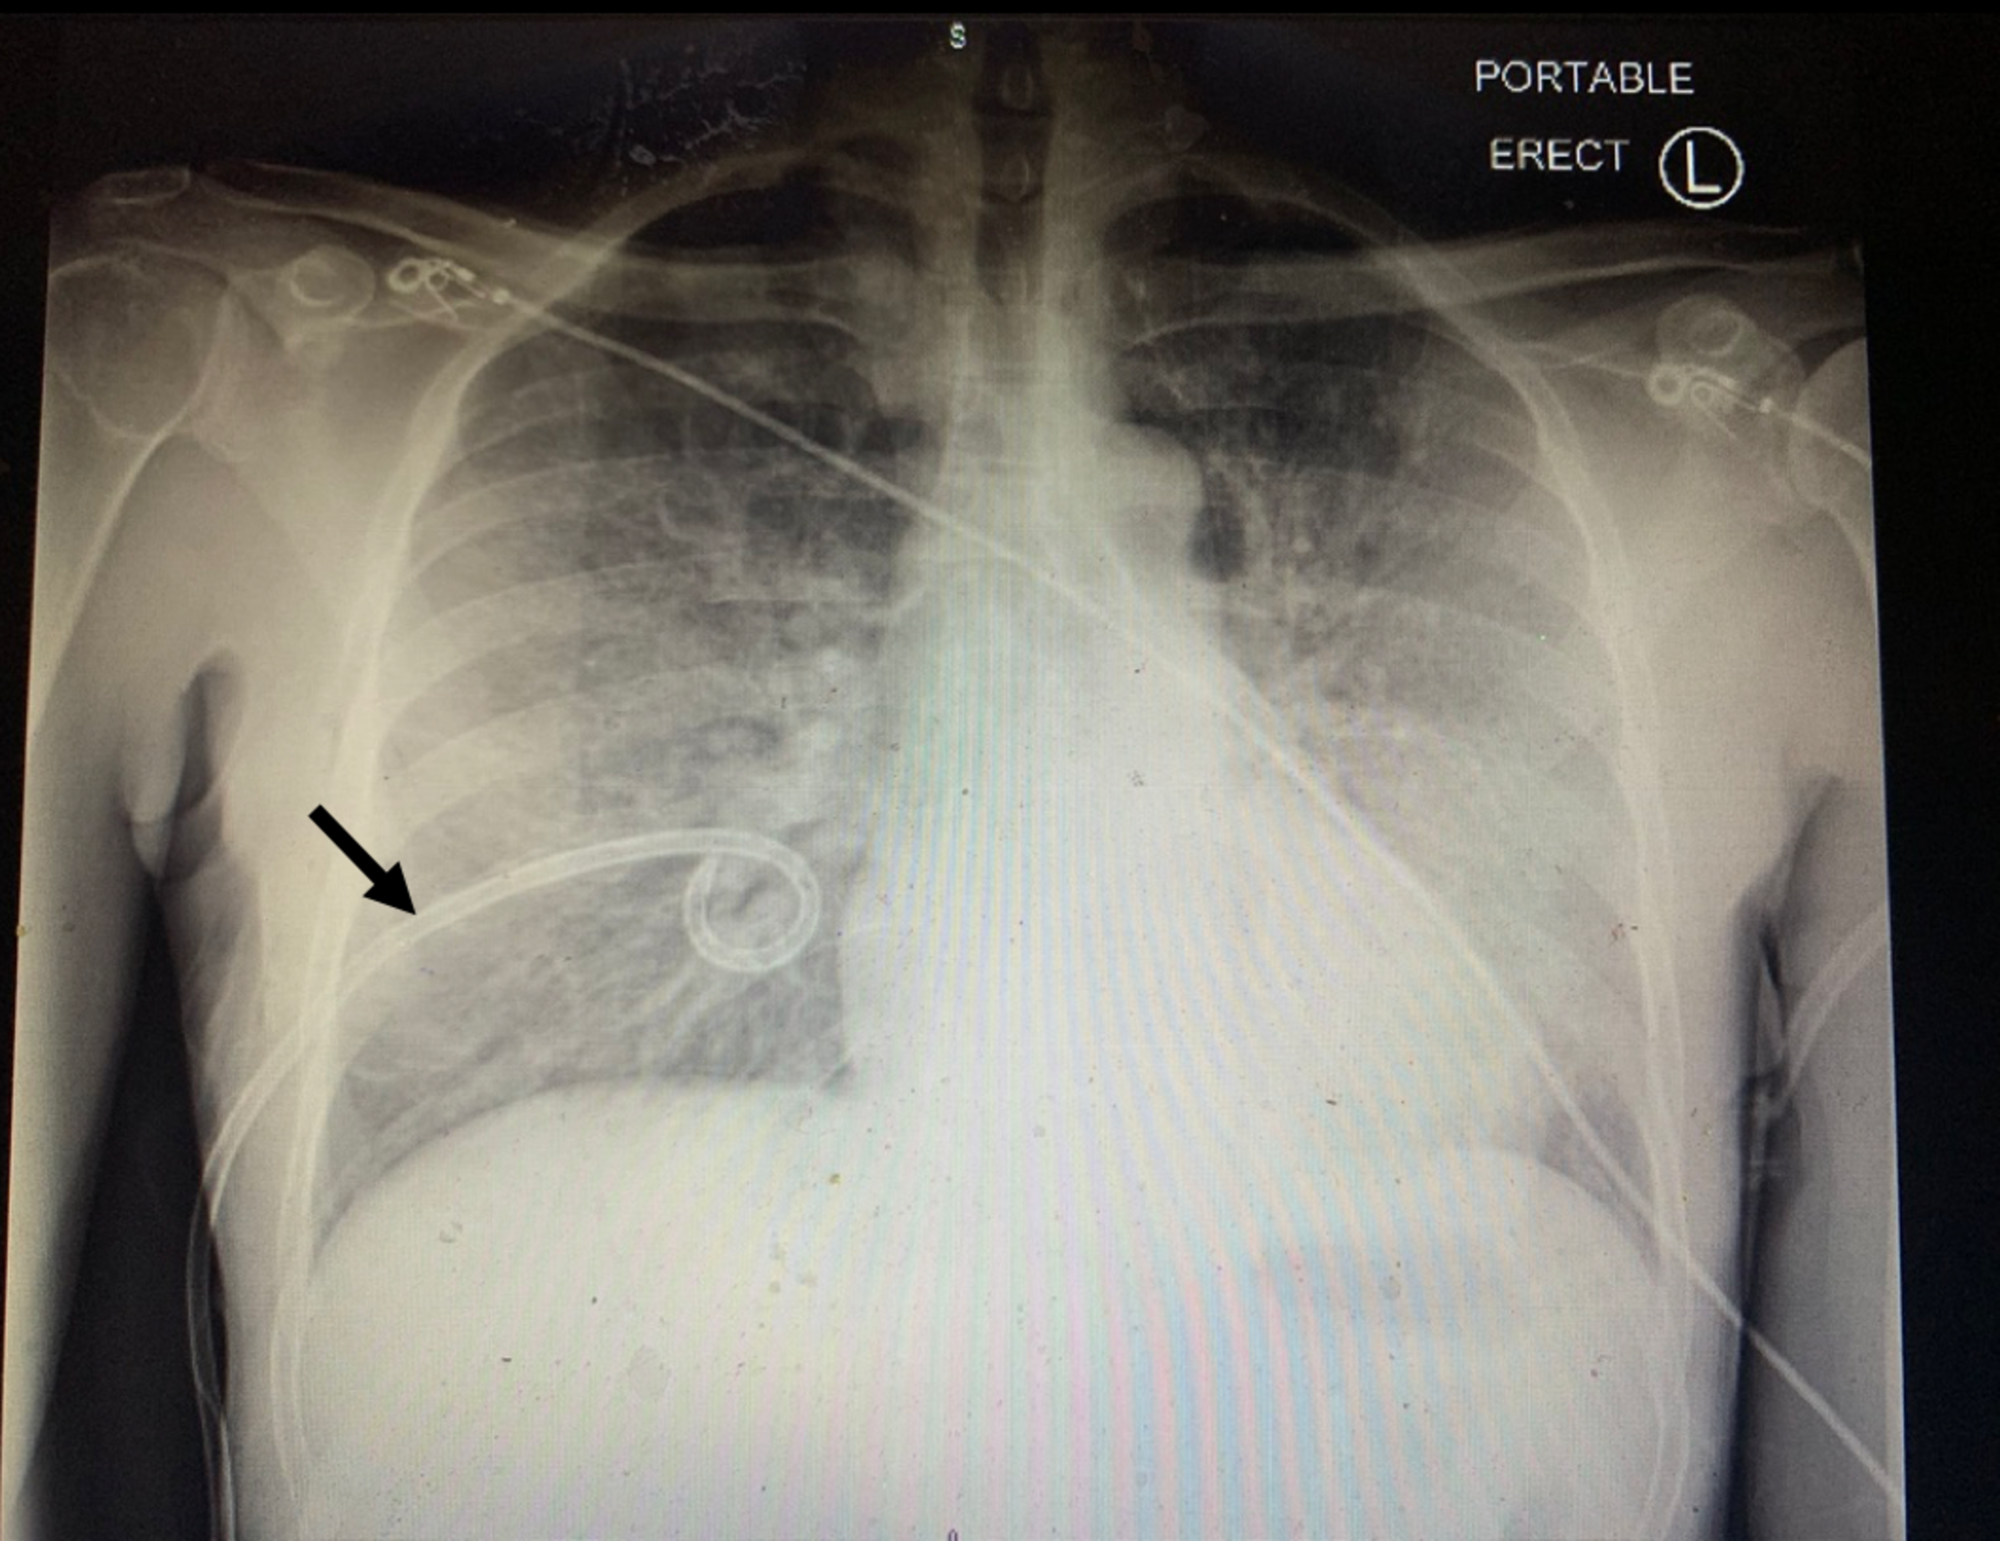 chest tube pneumothorax